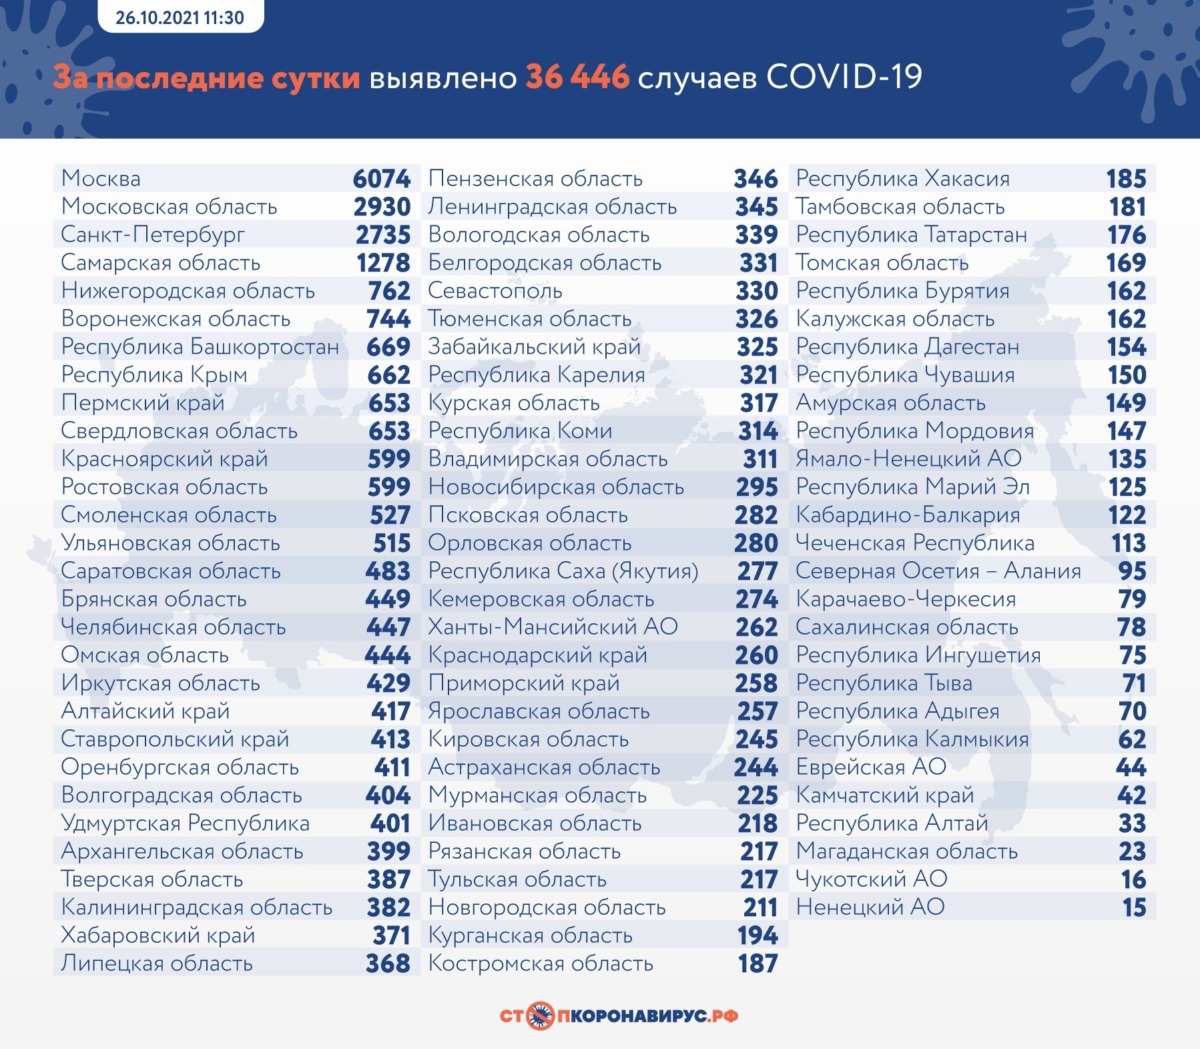 Оперативная статистика по коронавирусу в России на 26 октября